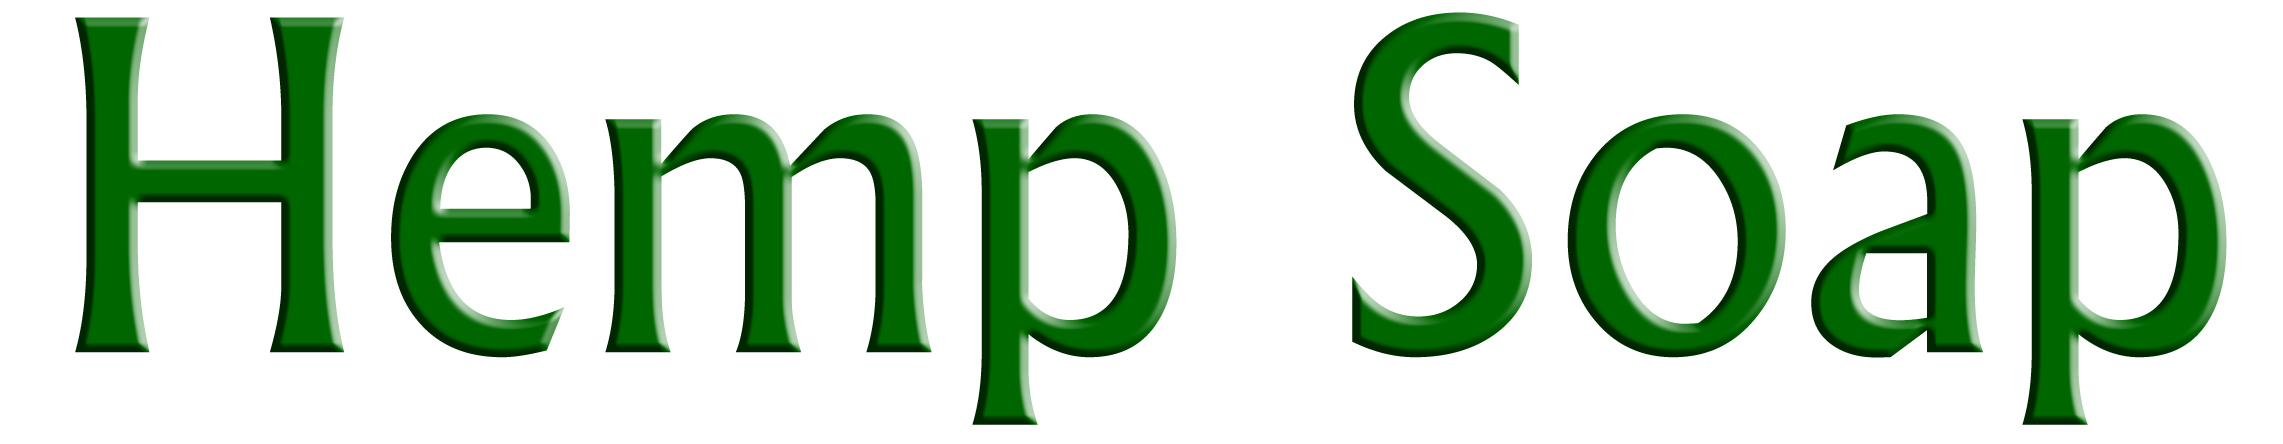 hemp soap logo